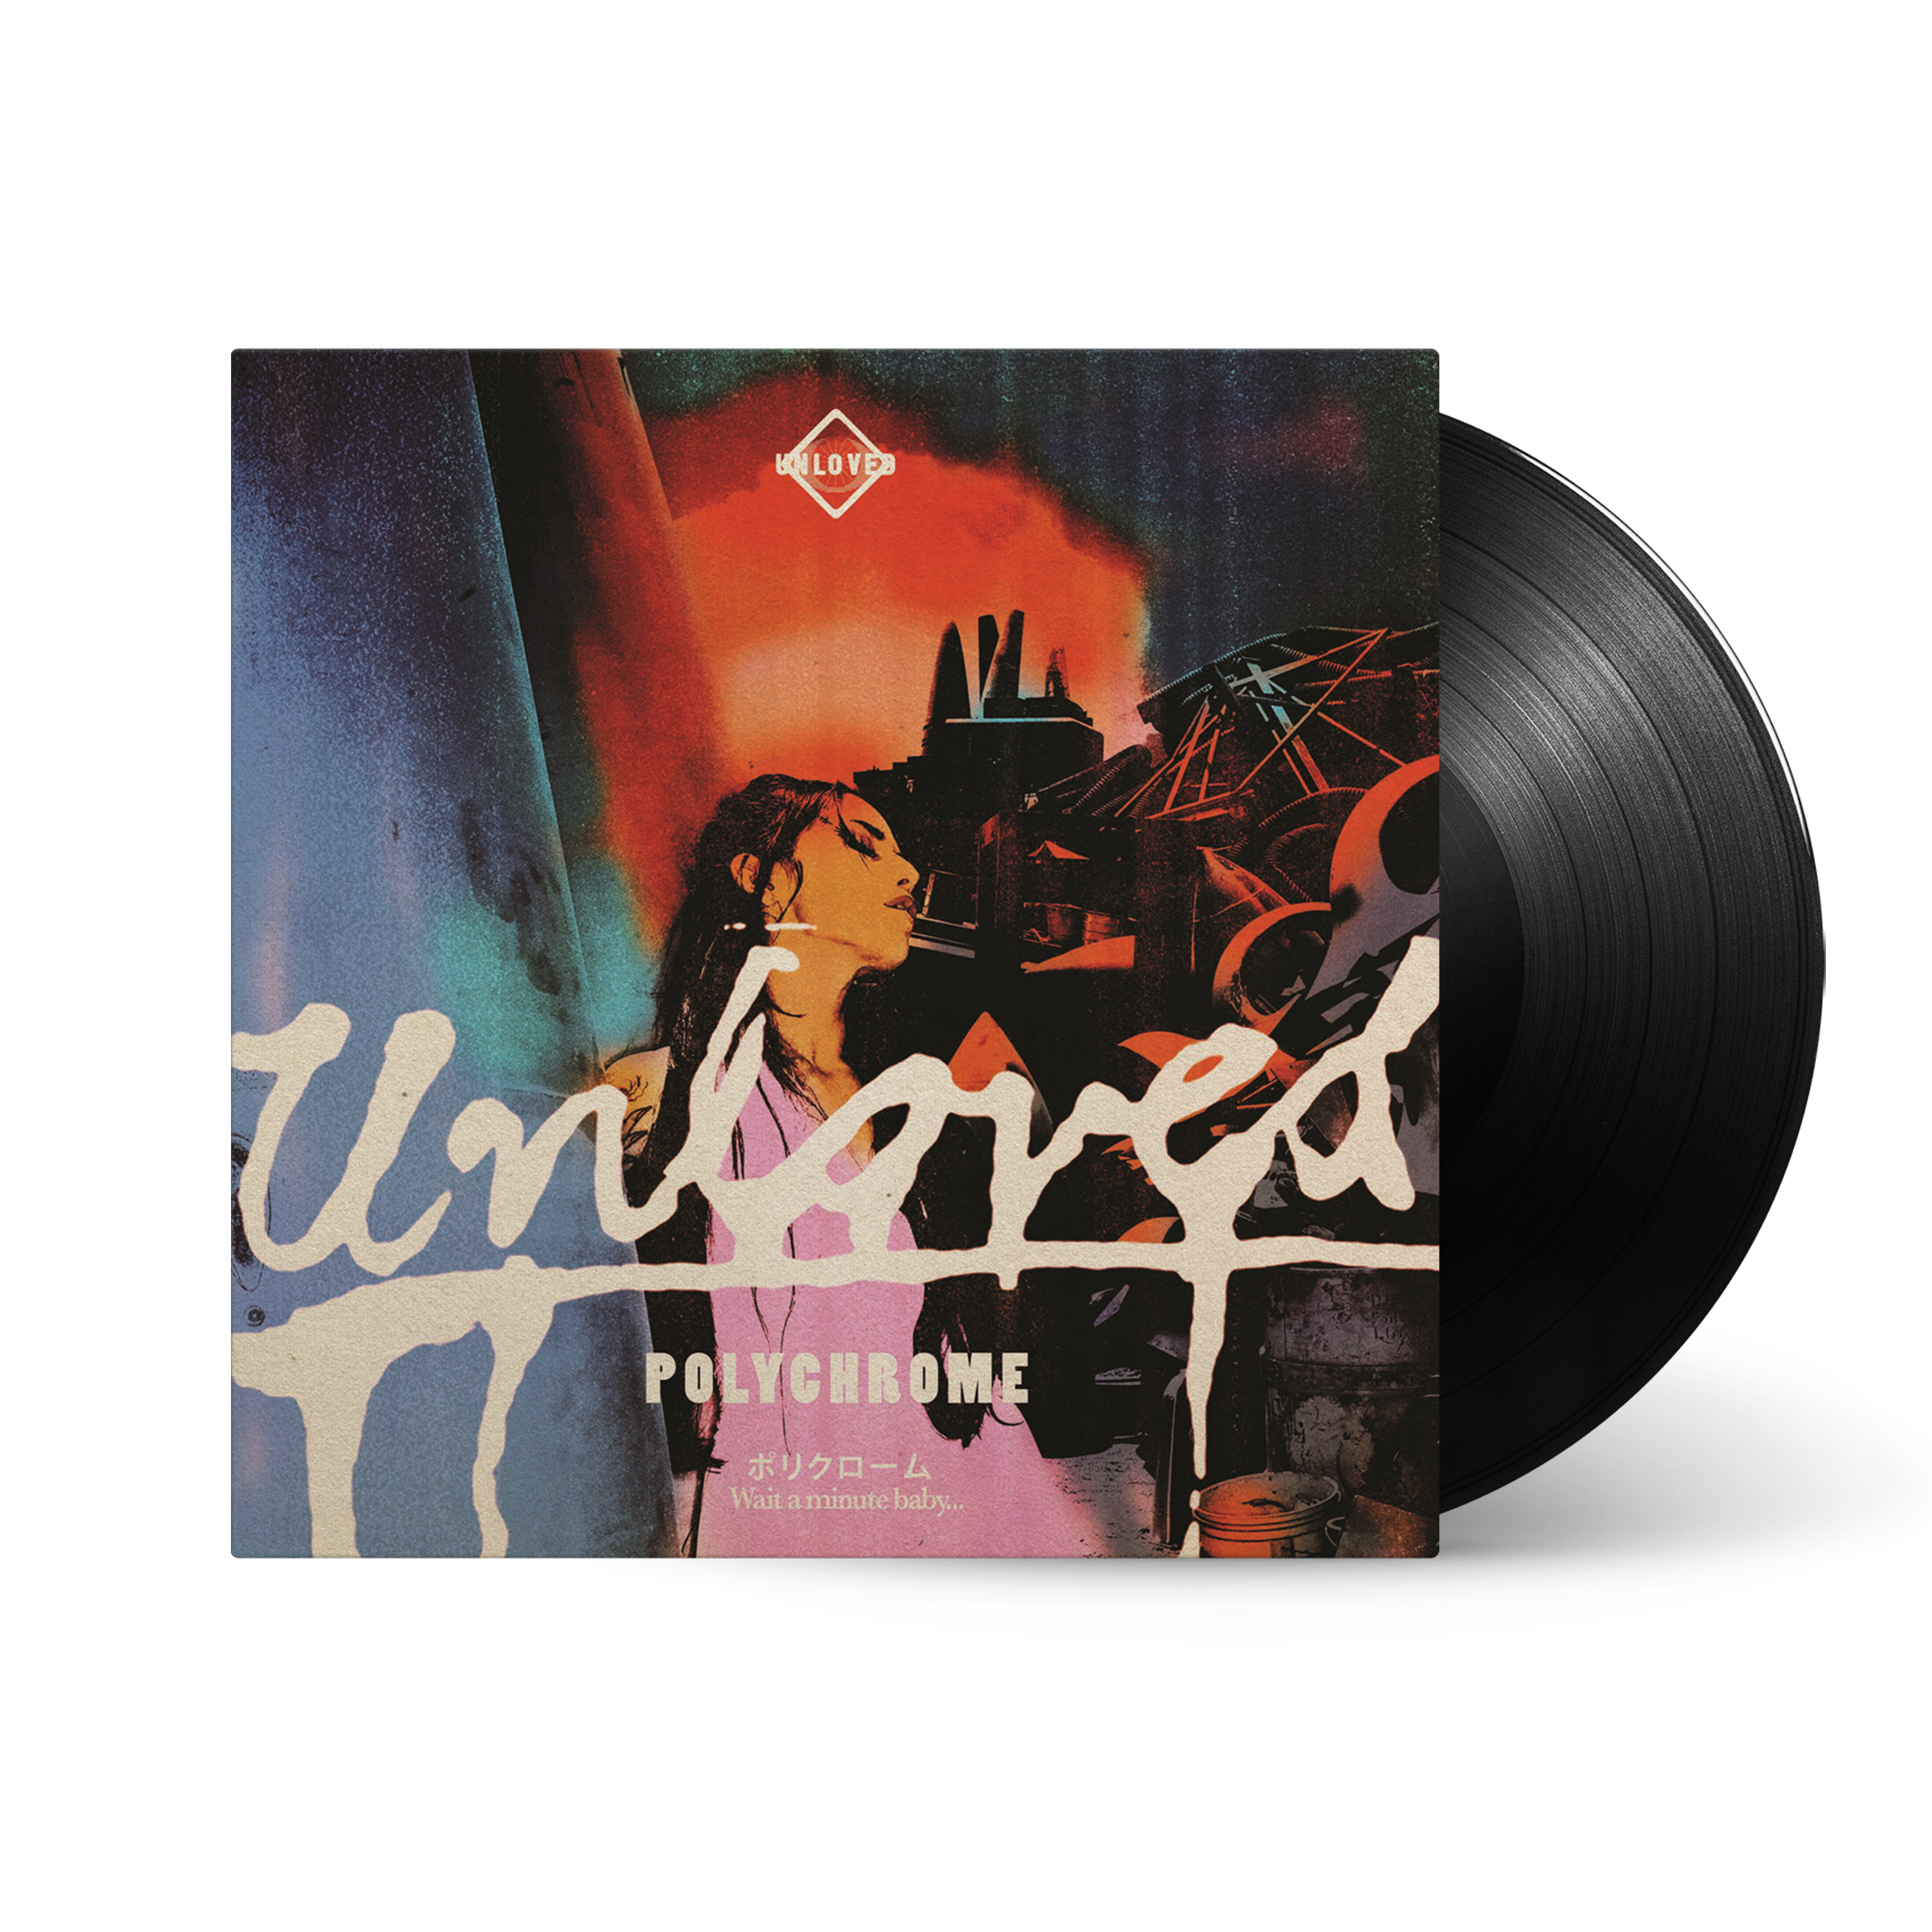 Unloved - Polychrome (The Pink Album Postlude): Vinyl LP